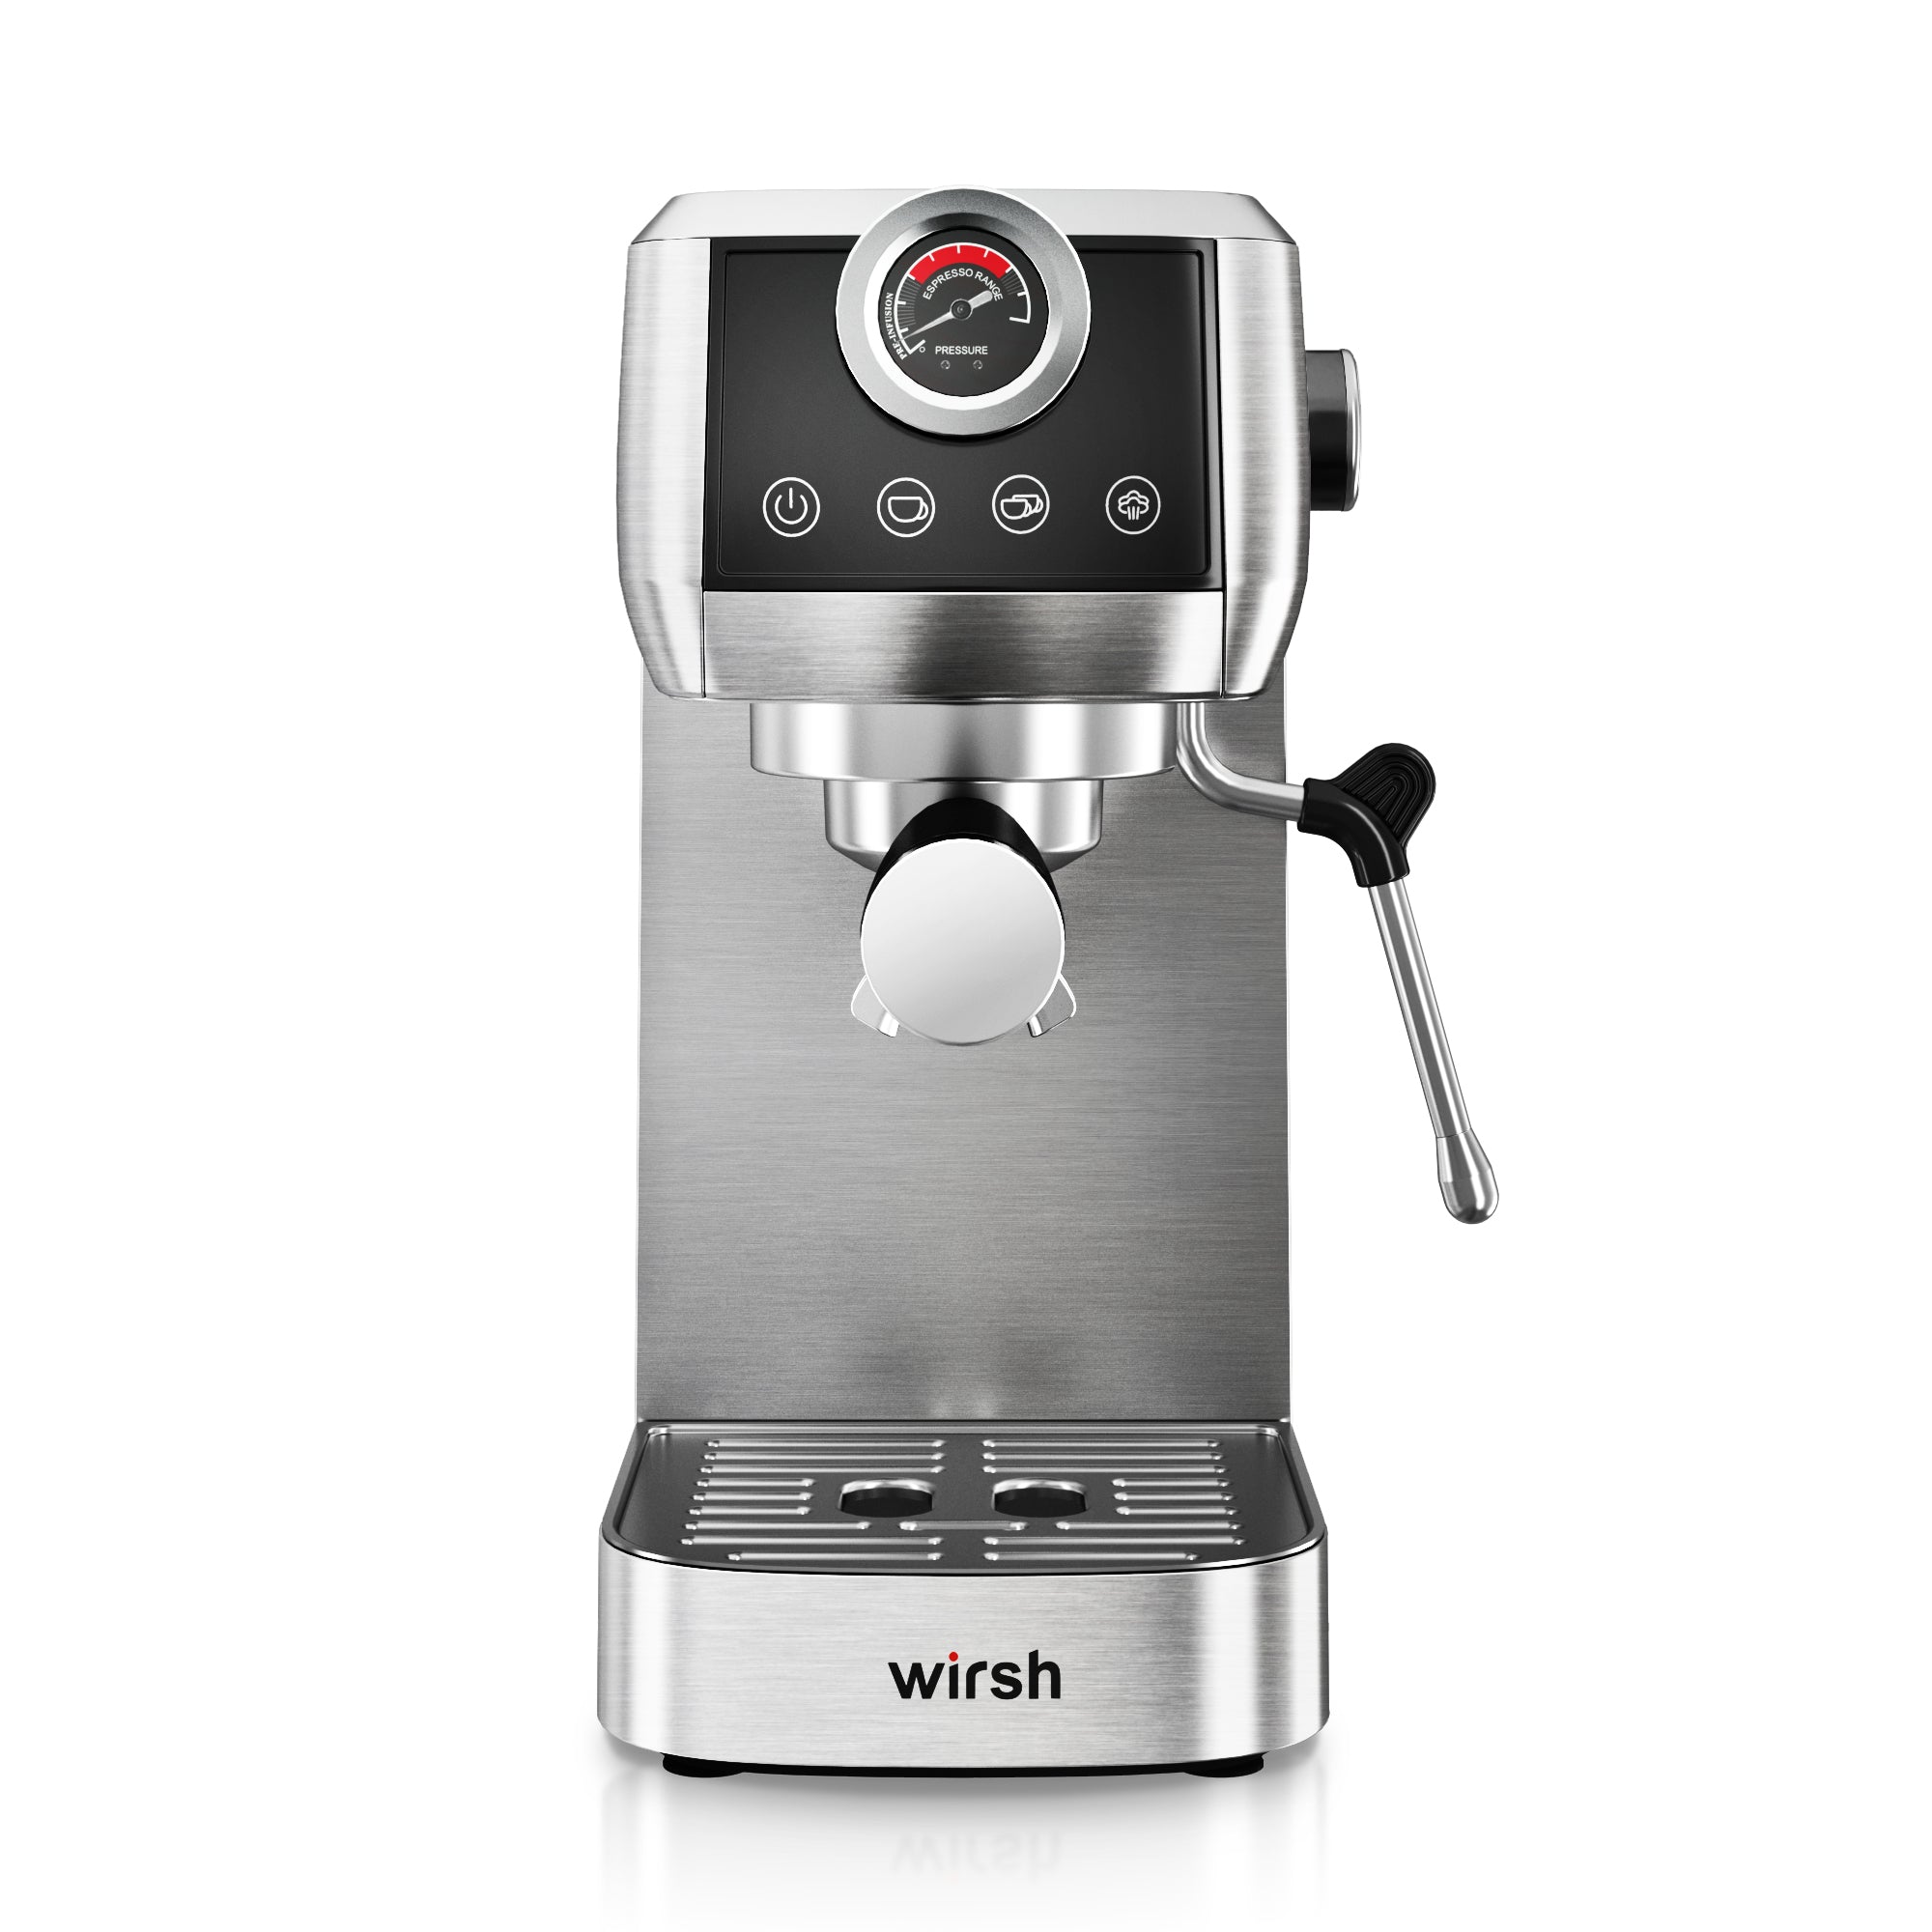 Espresso Coffee Stirrer Easy to Clean Espresso Auxiliary Device